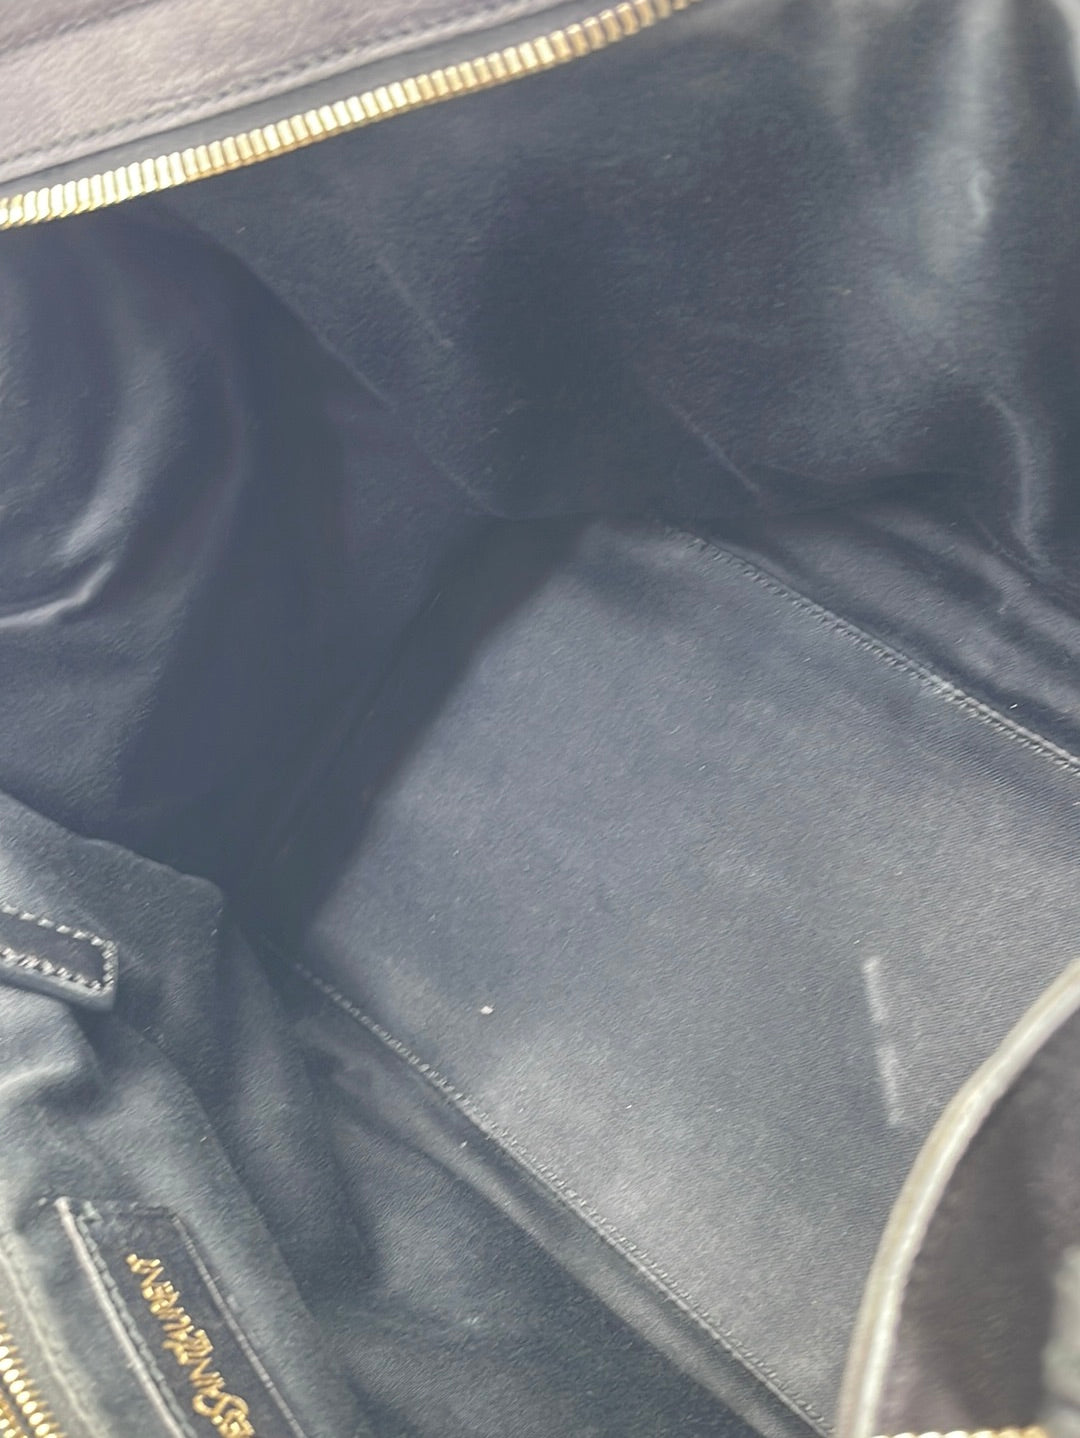 Monogram cabas leather handbag Saint Laurent Black in Leather - 12590029